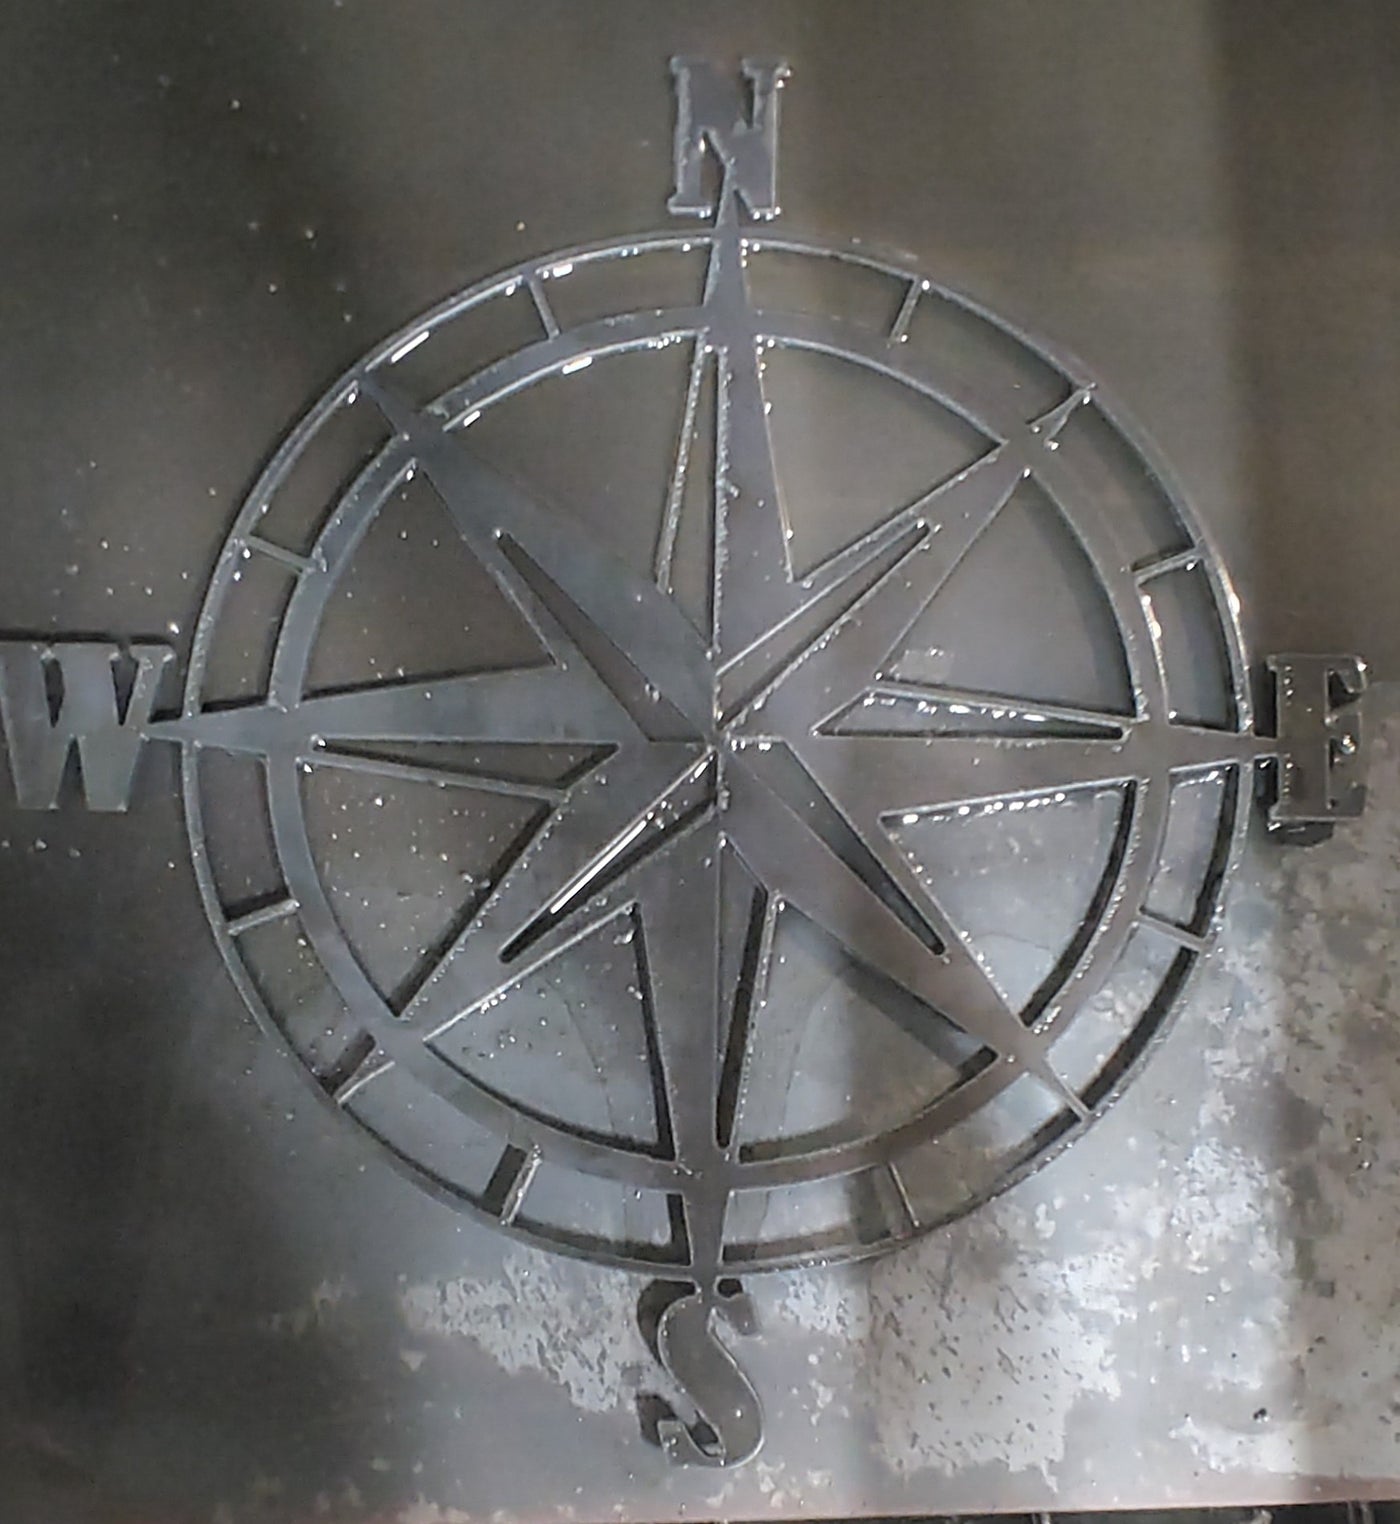 Nautical Compass - Raymond's Workshop